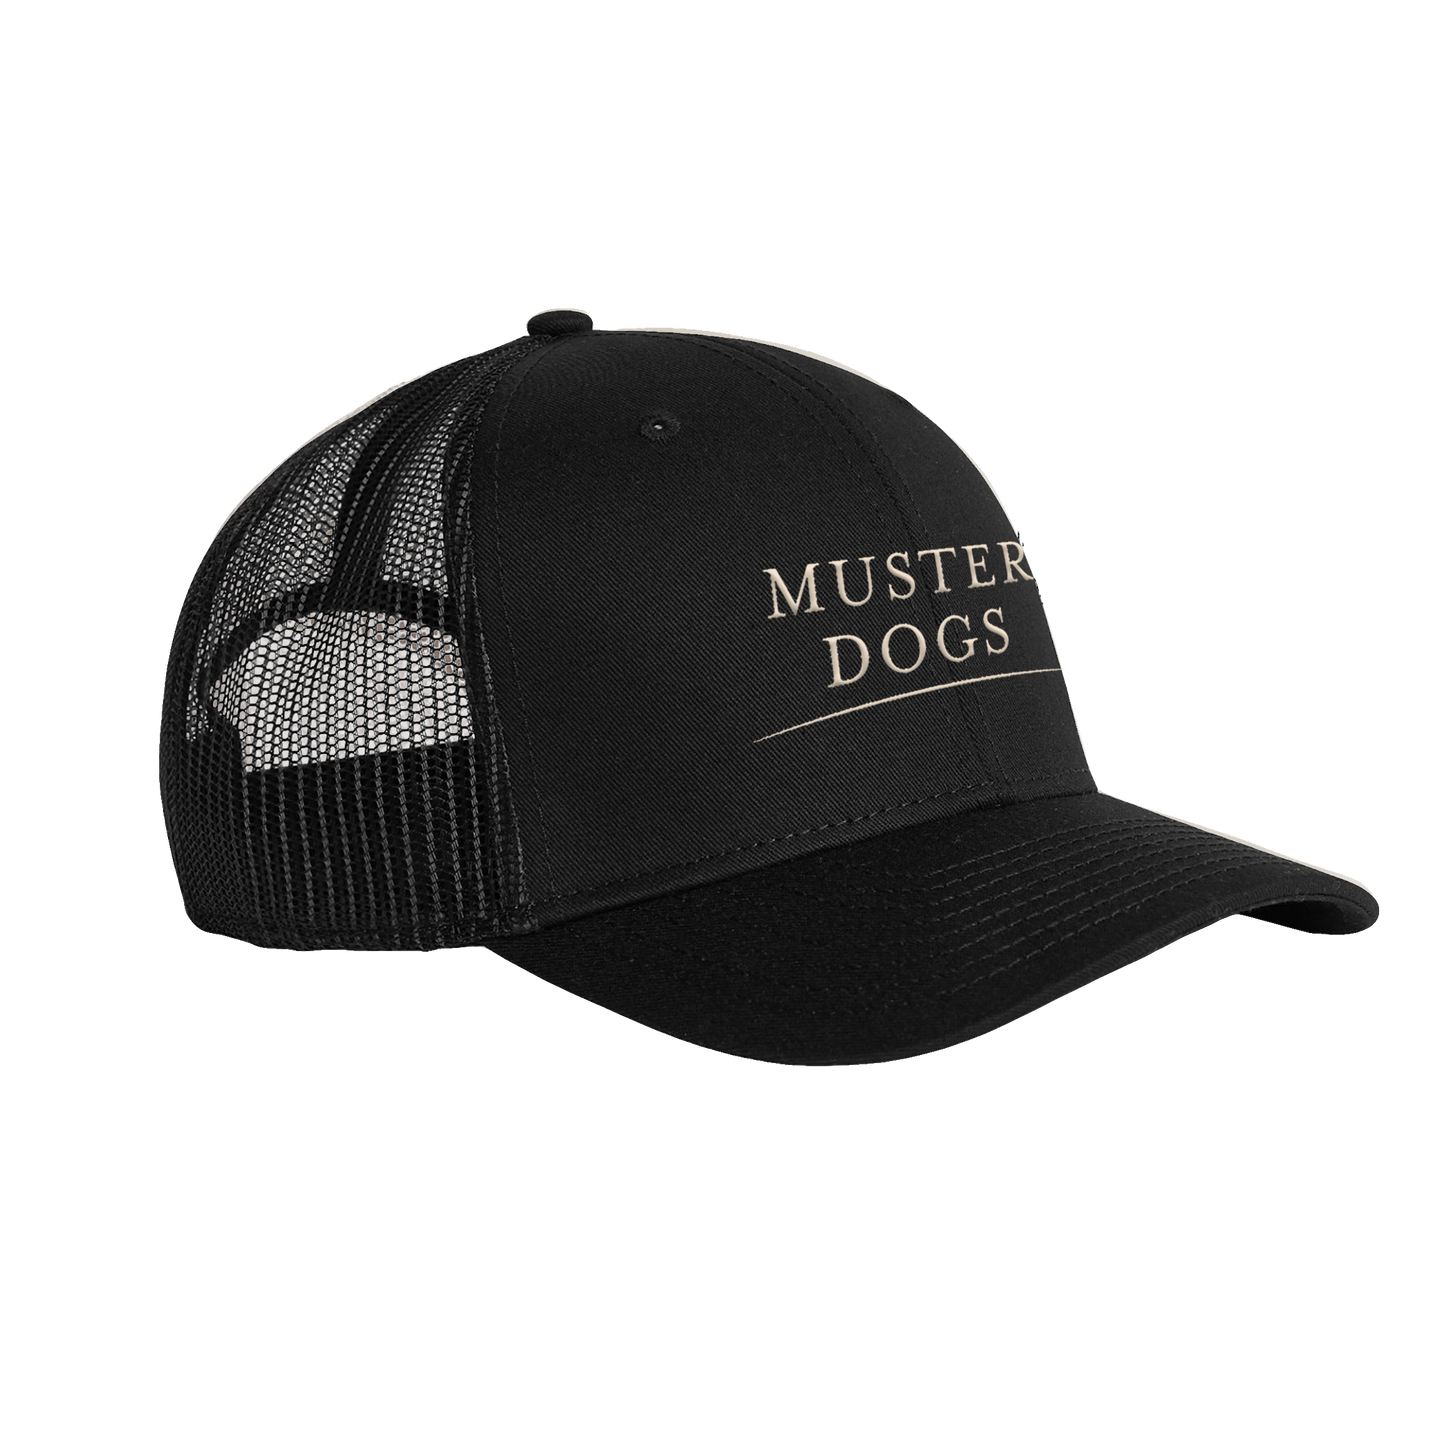 Muster Dogs Black Cap